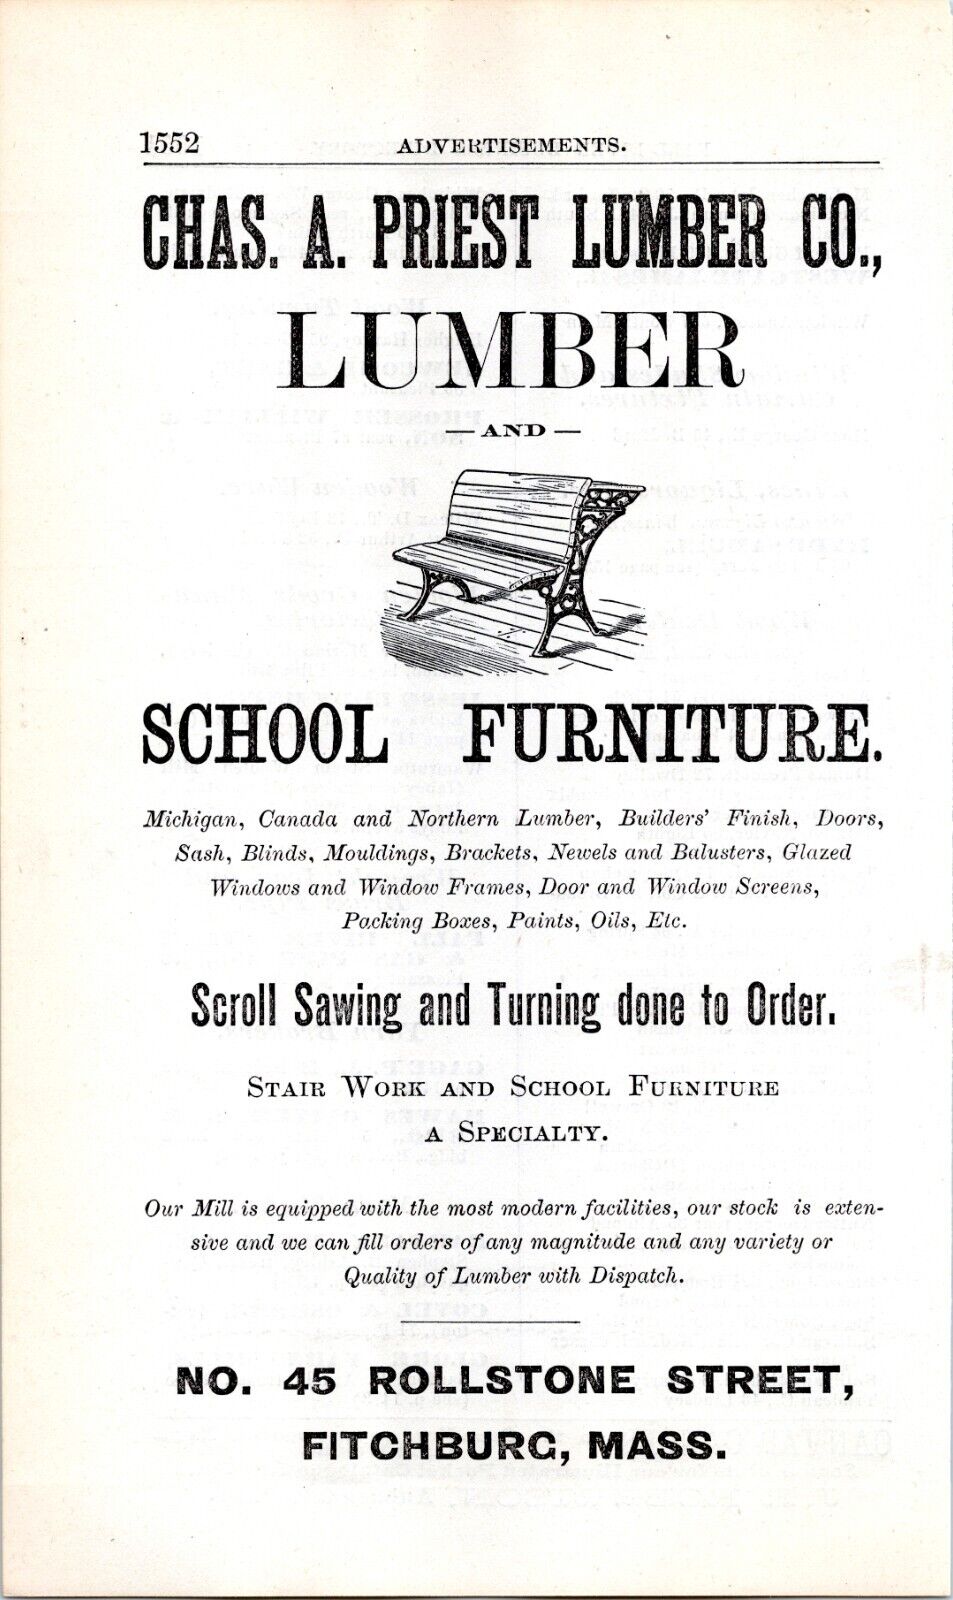 1889 Print Ad - Charles A Priest Lumber Company, Fitchburg Massachusetts